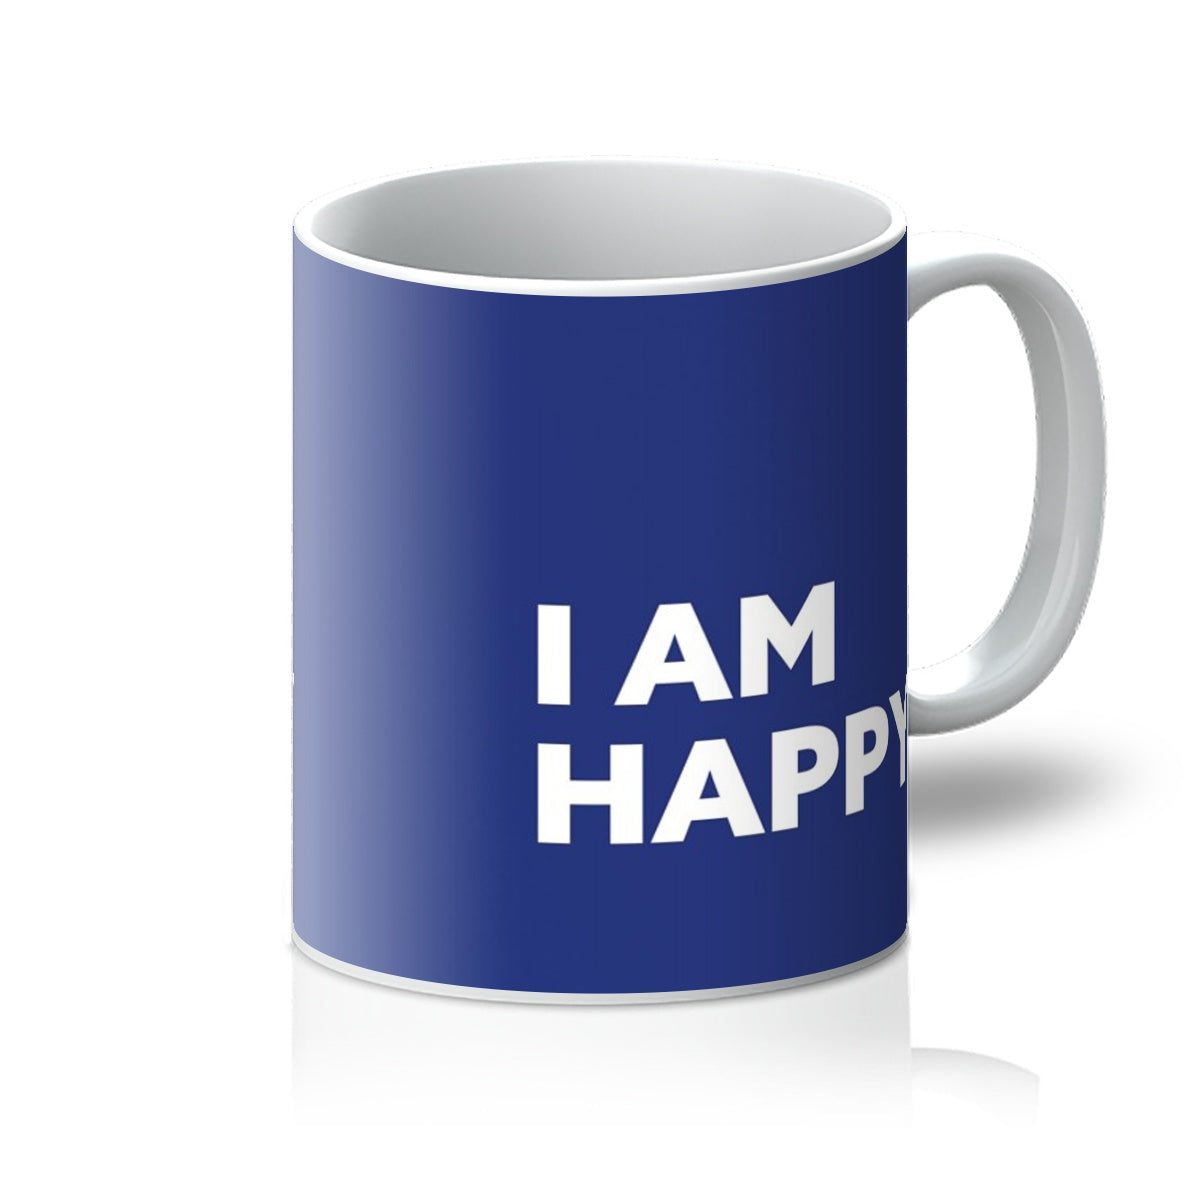 I AM Happy – Royal Blue Mug